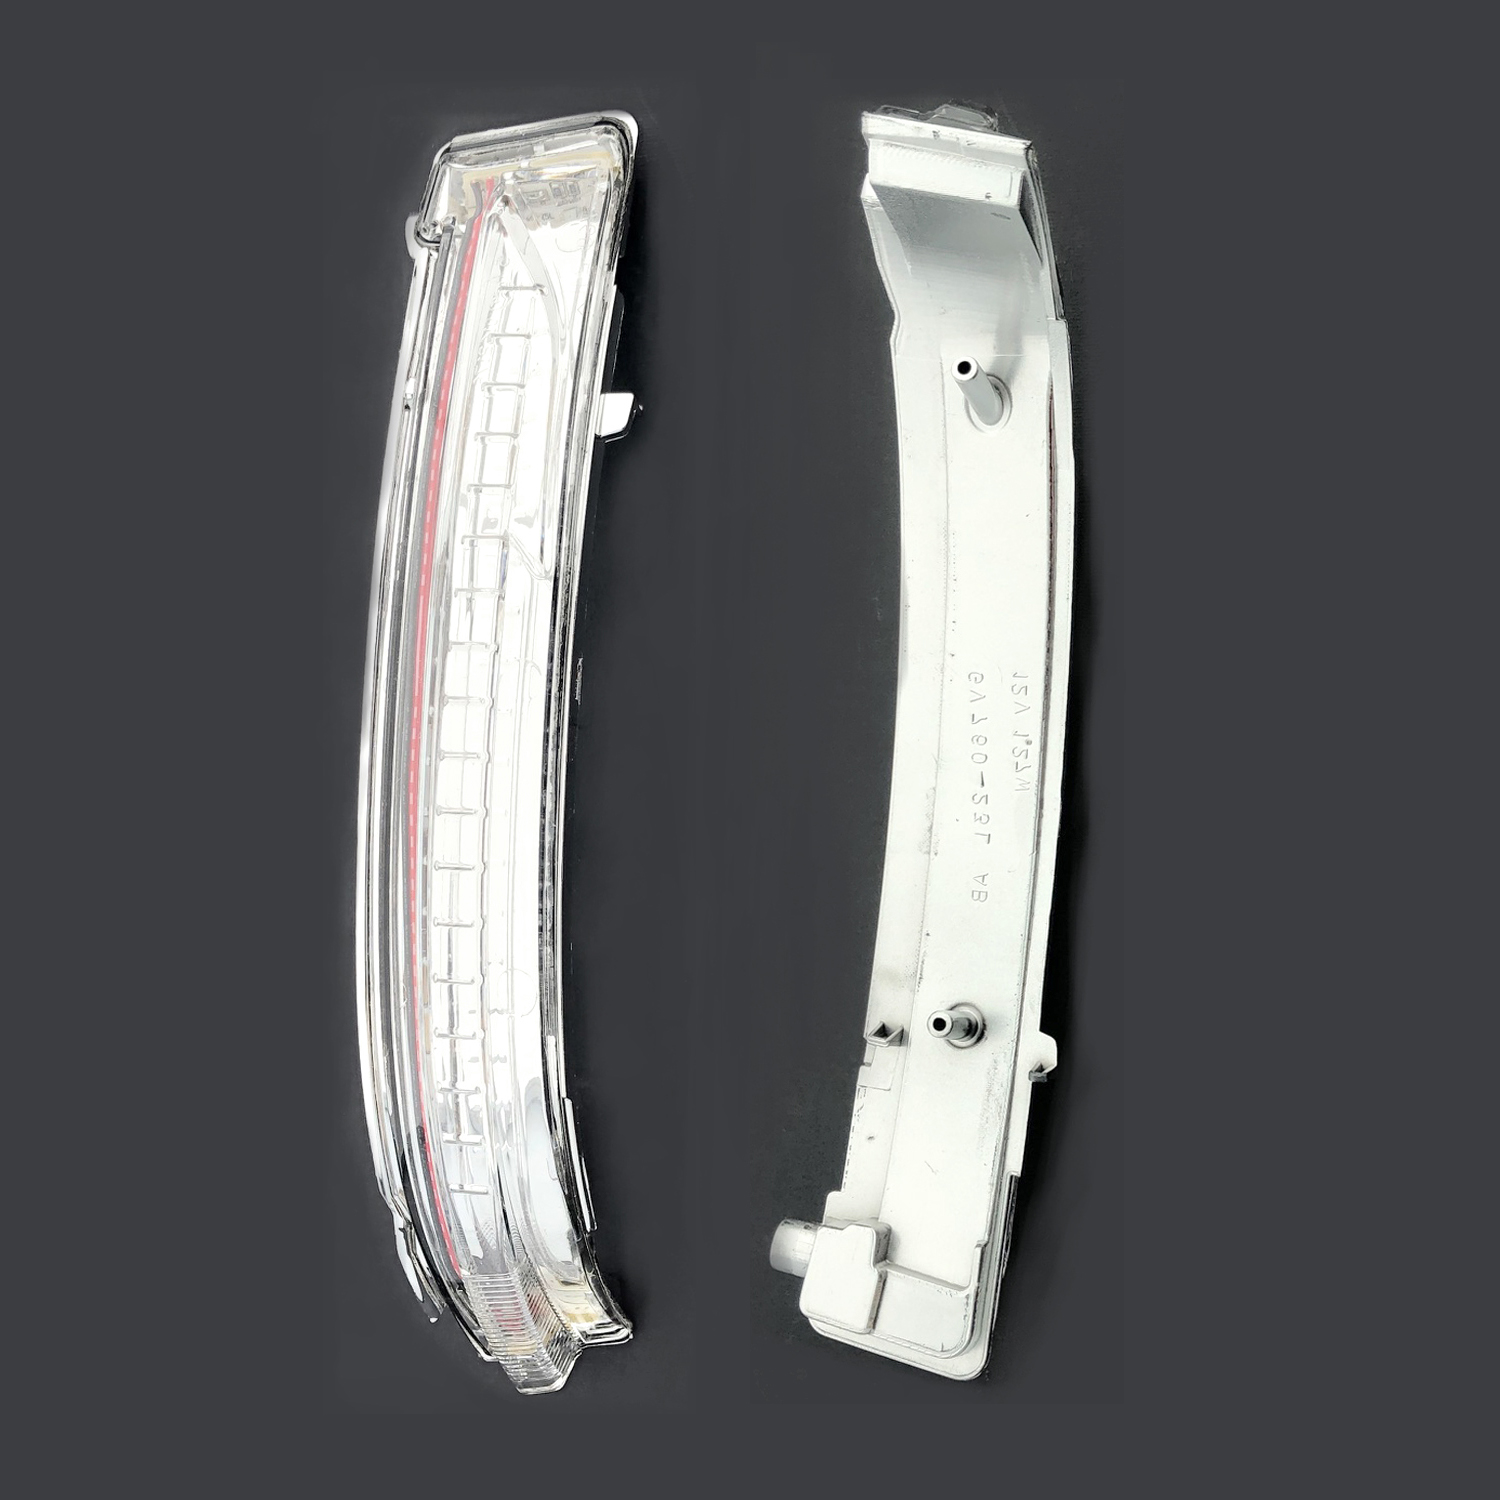 Nissan Qashqai Wing Mirror Indicator RIGHT HAND ( UK Driver Side ) 2014 to 2020 – Wing Mirror Indicator ( Fits for J11 Model )